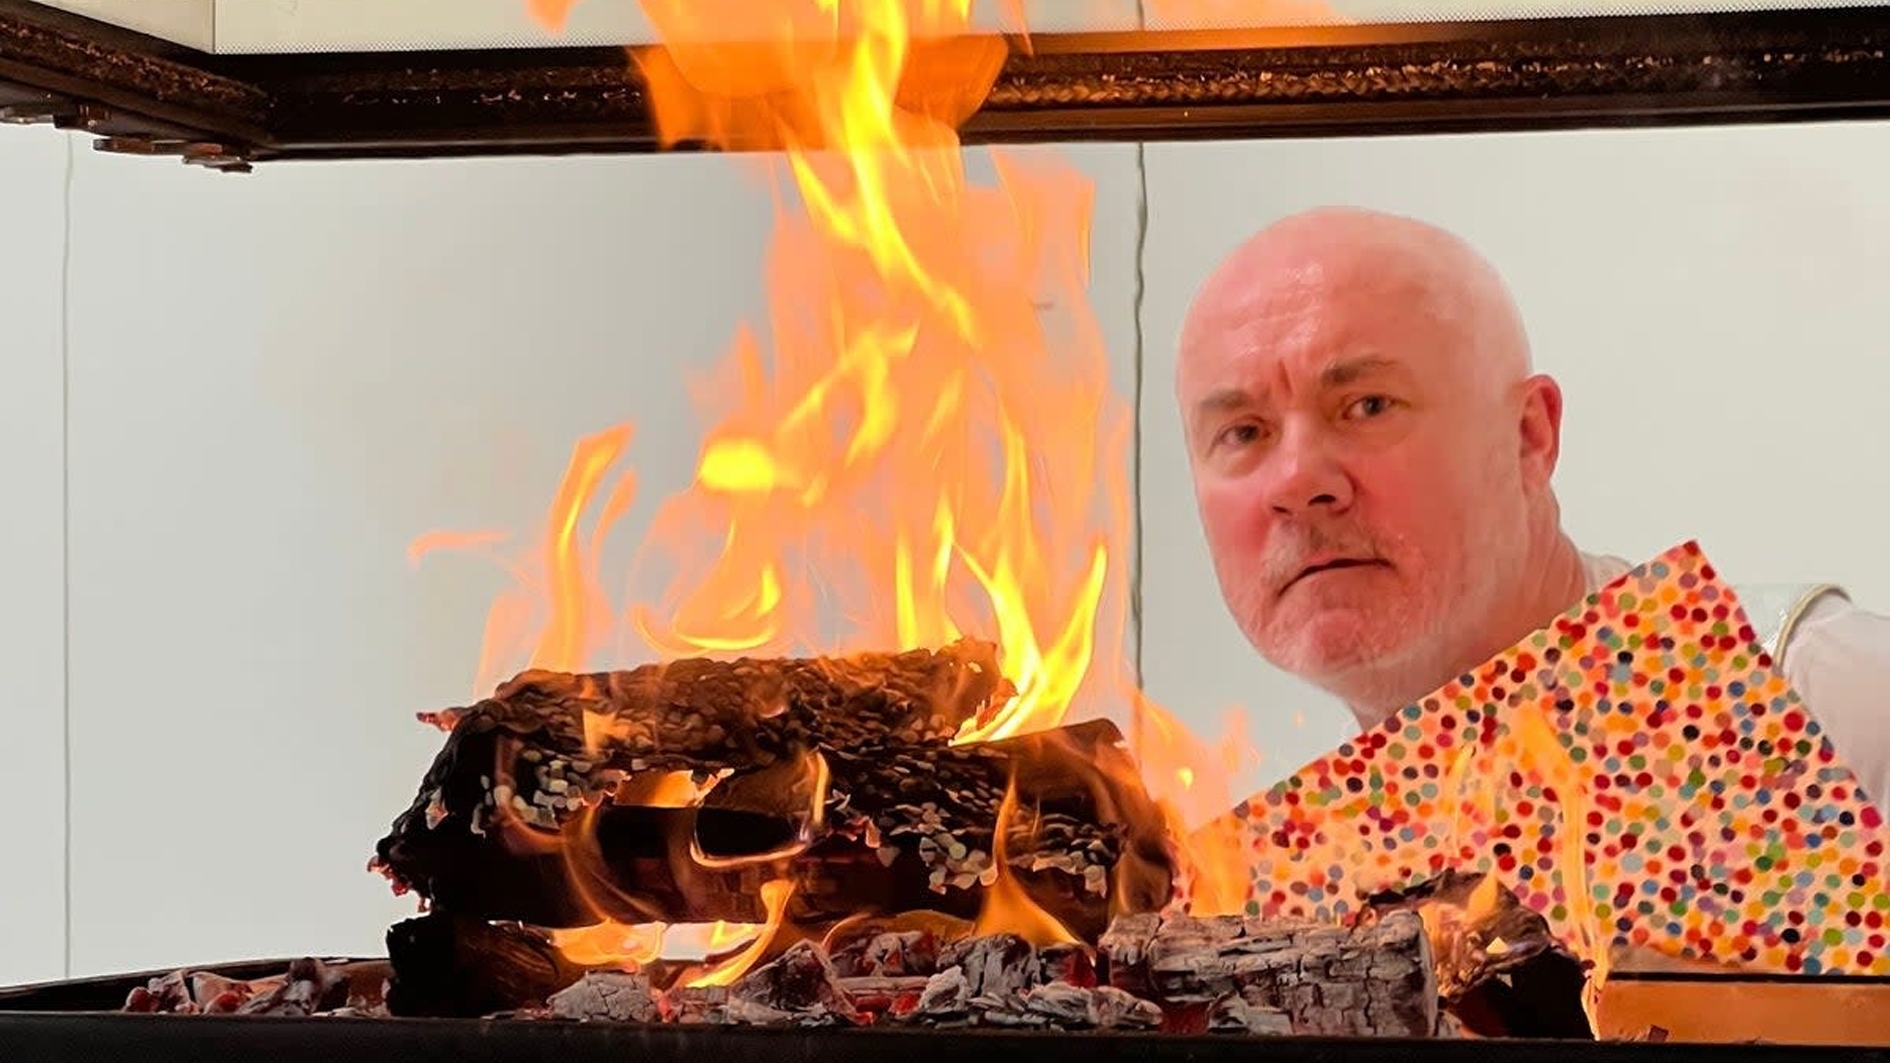 داميان هيرست يحرق لوحات له في معرضه بلندن